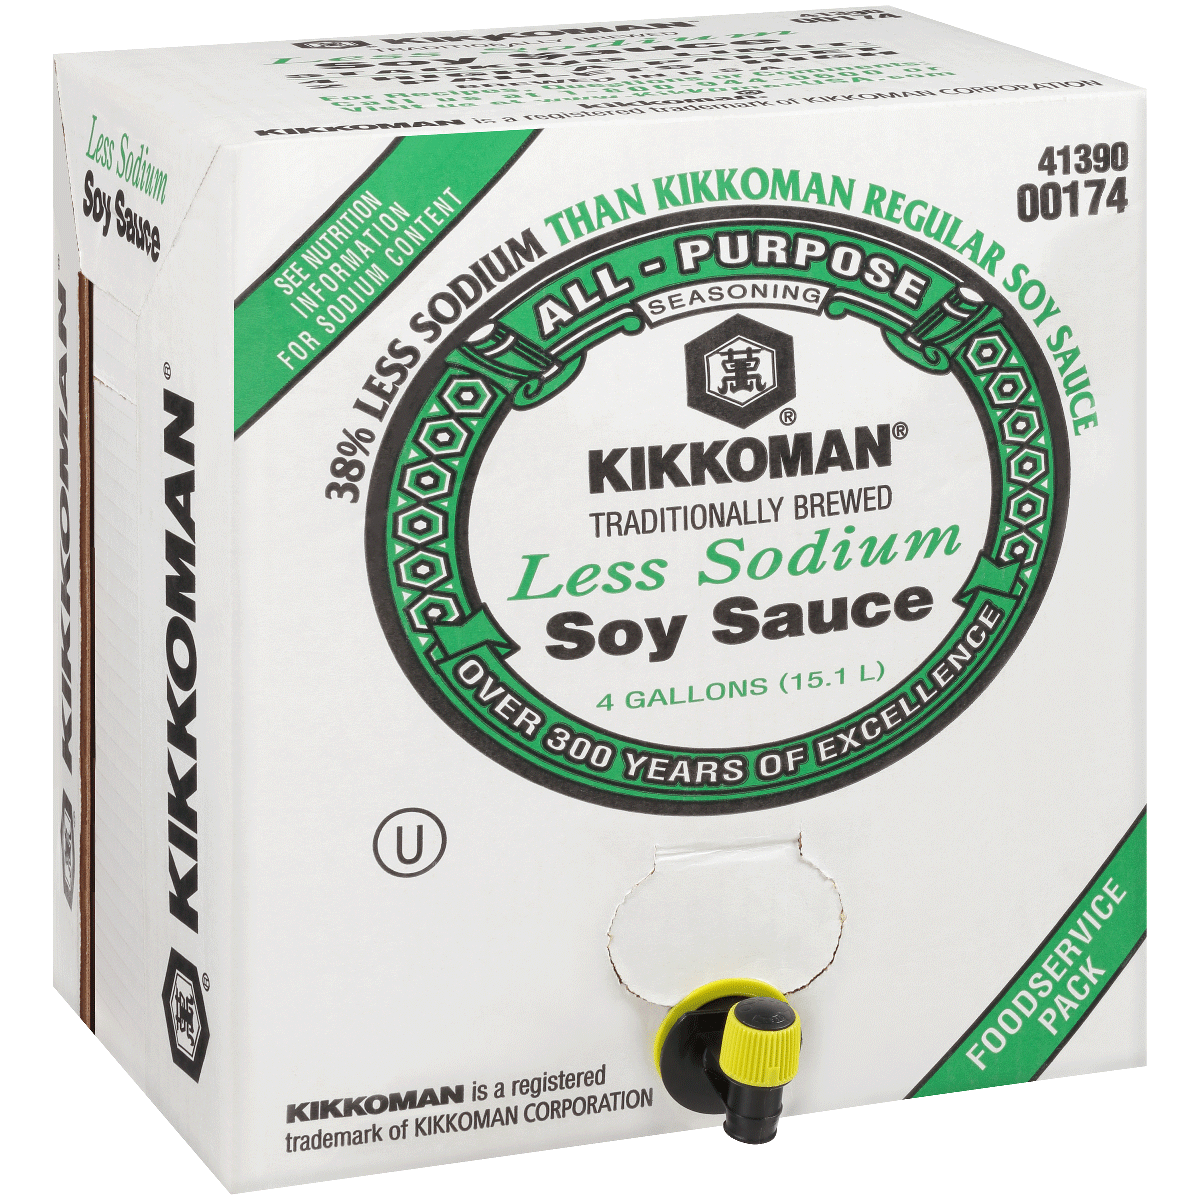 4 GAL Less Sodium Soy Sauce - Cube packs